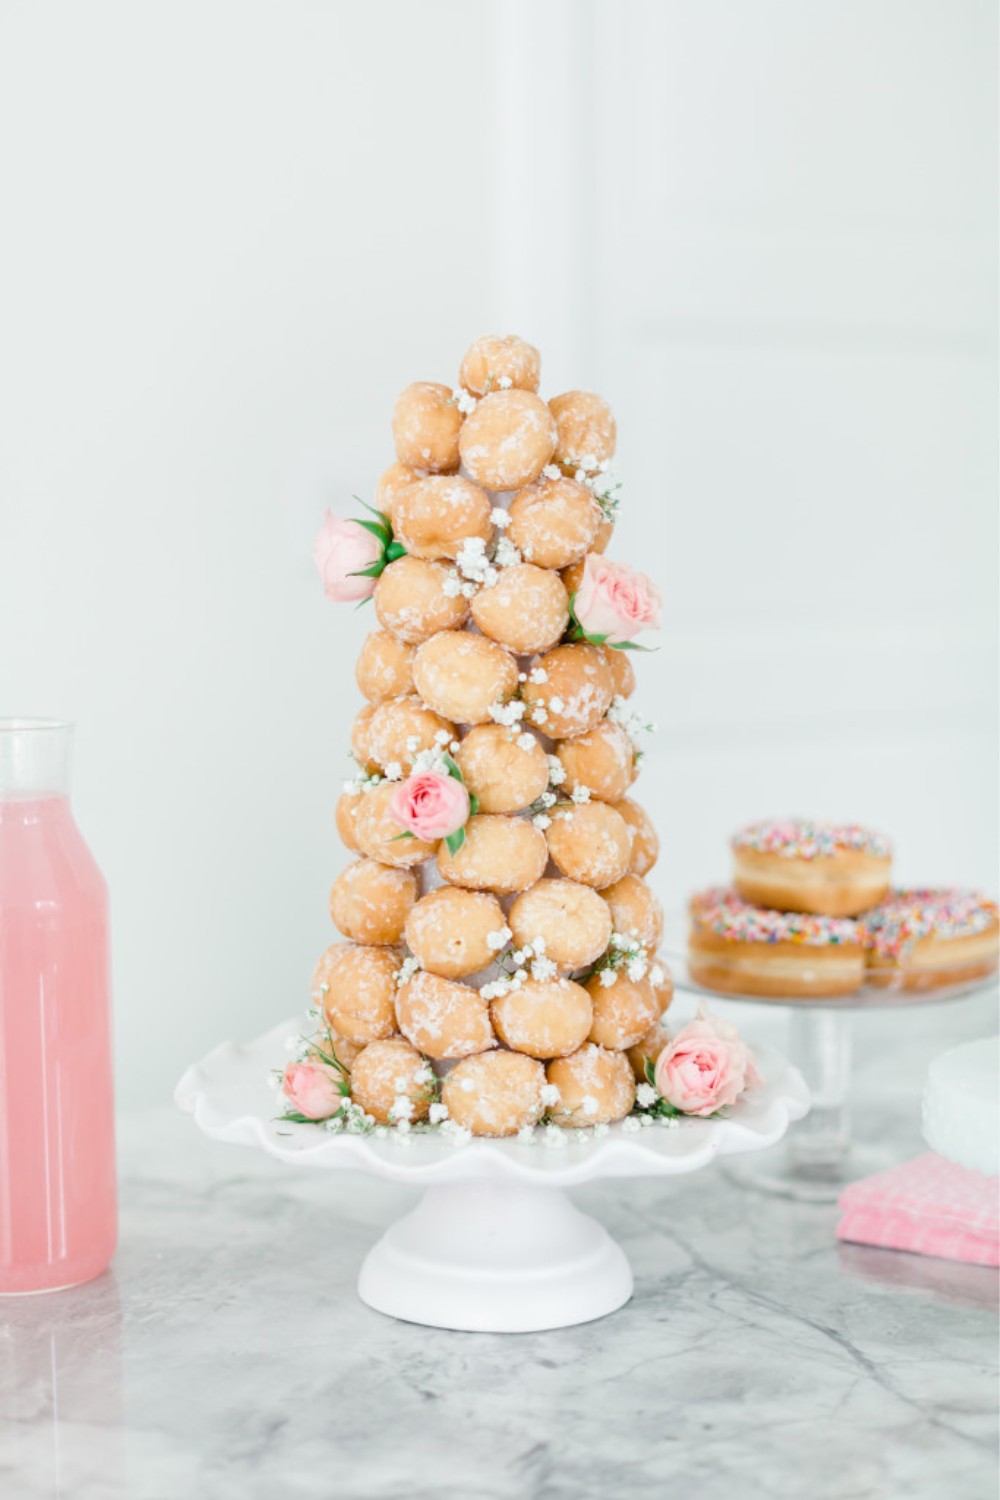 Wedding Cake Alternatives - donut holes